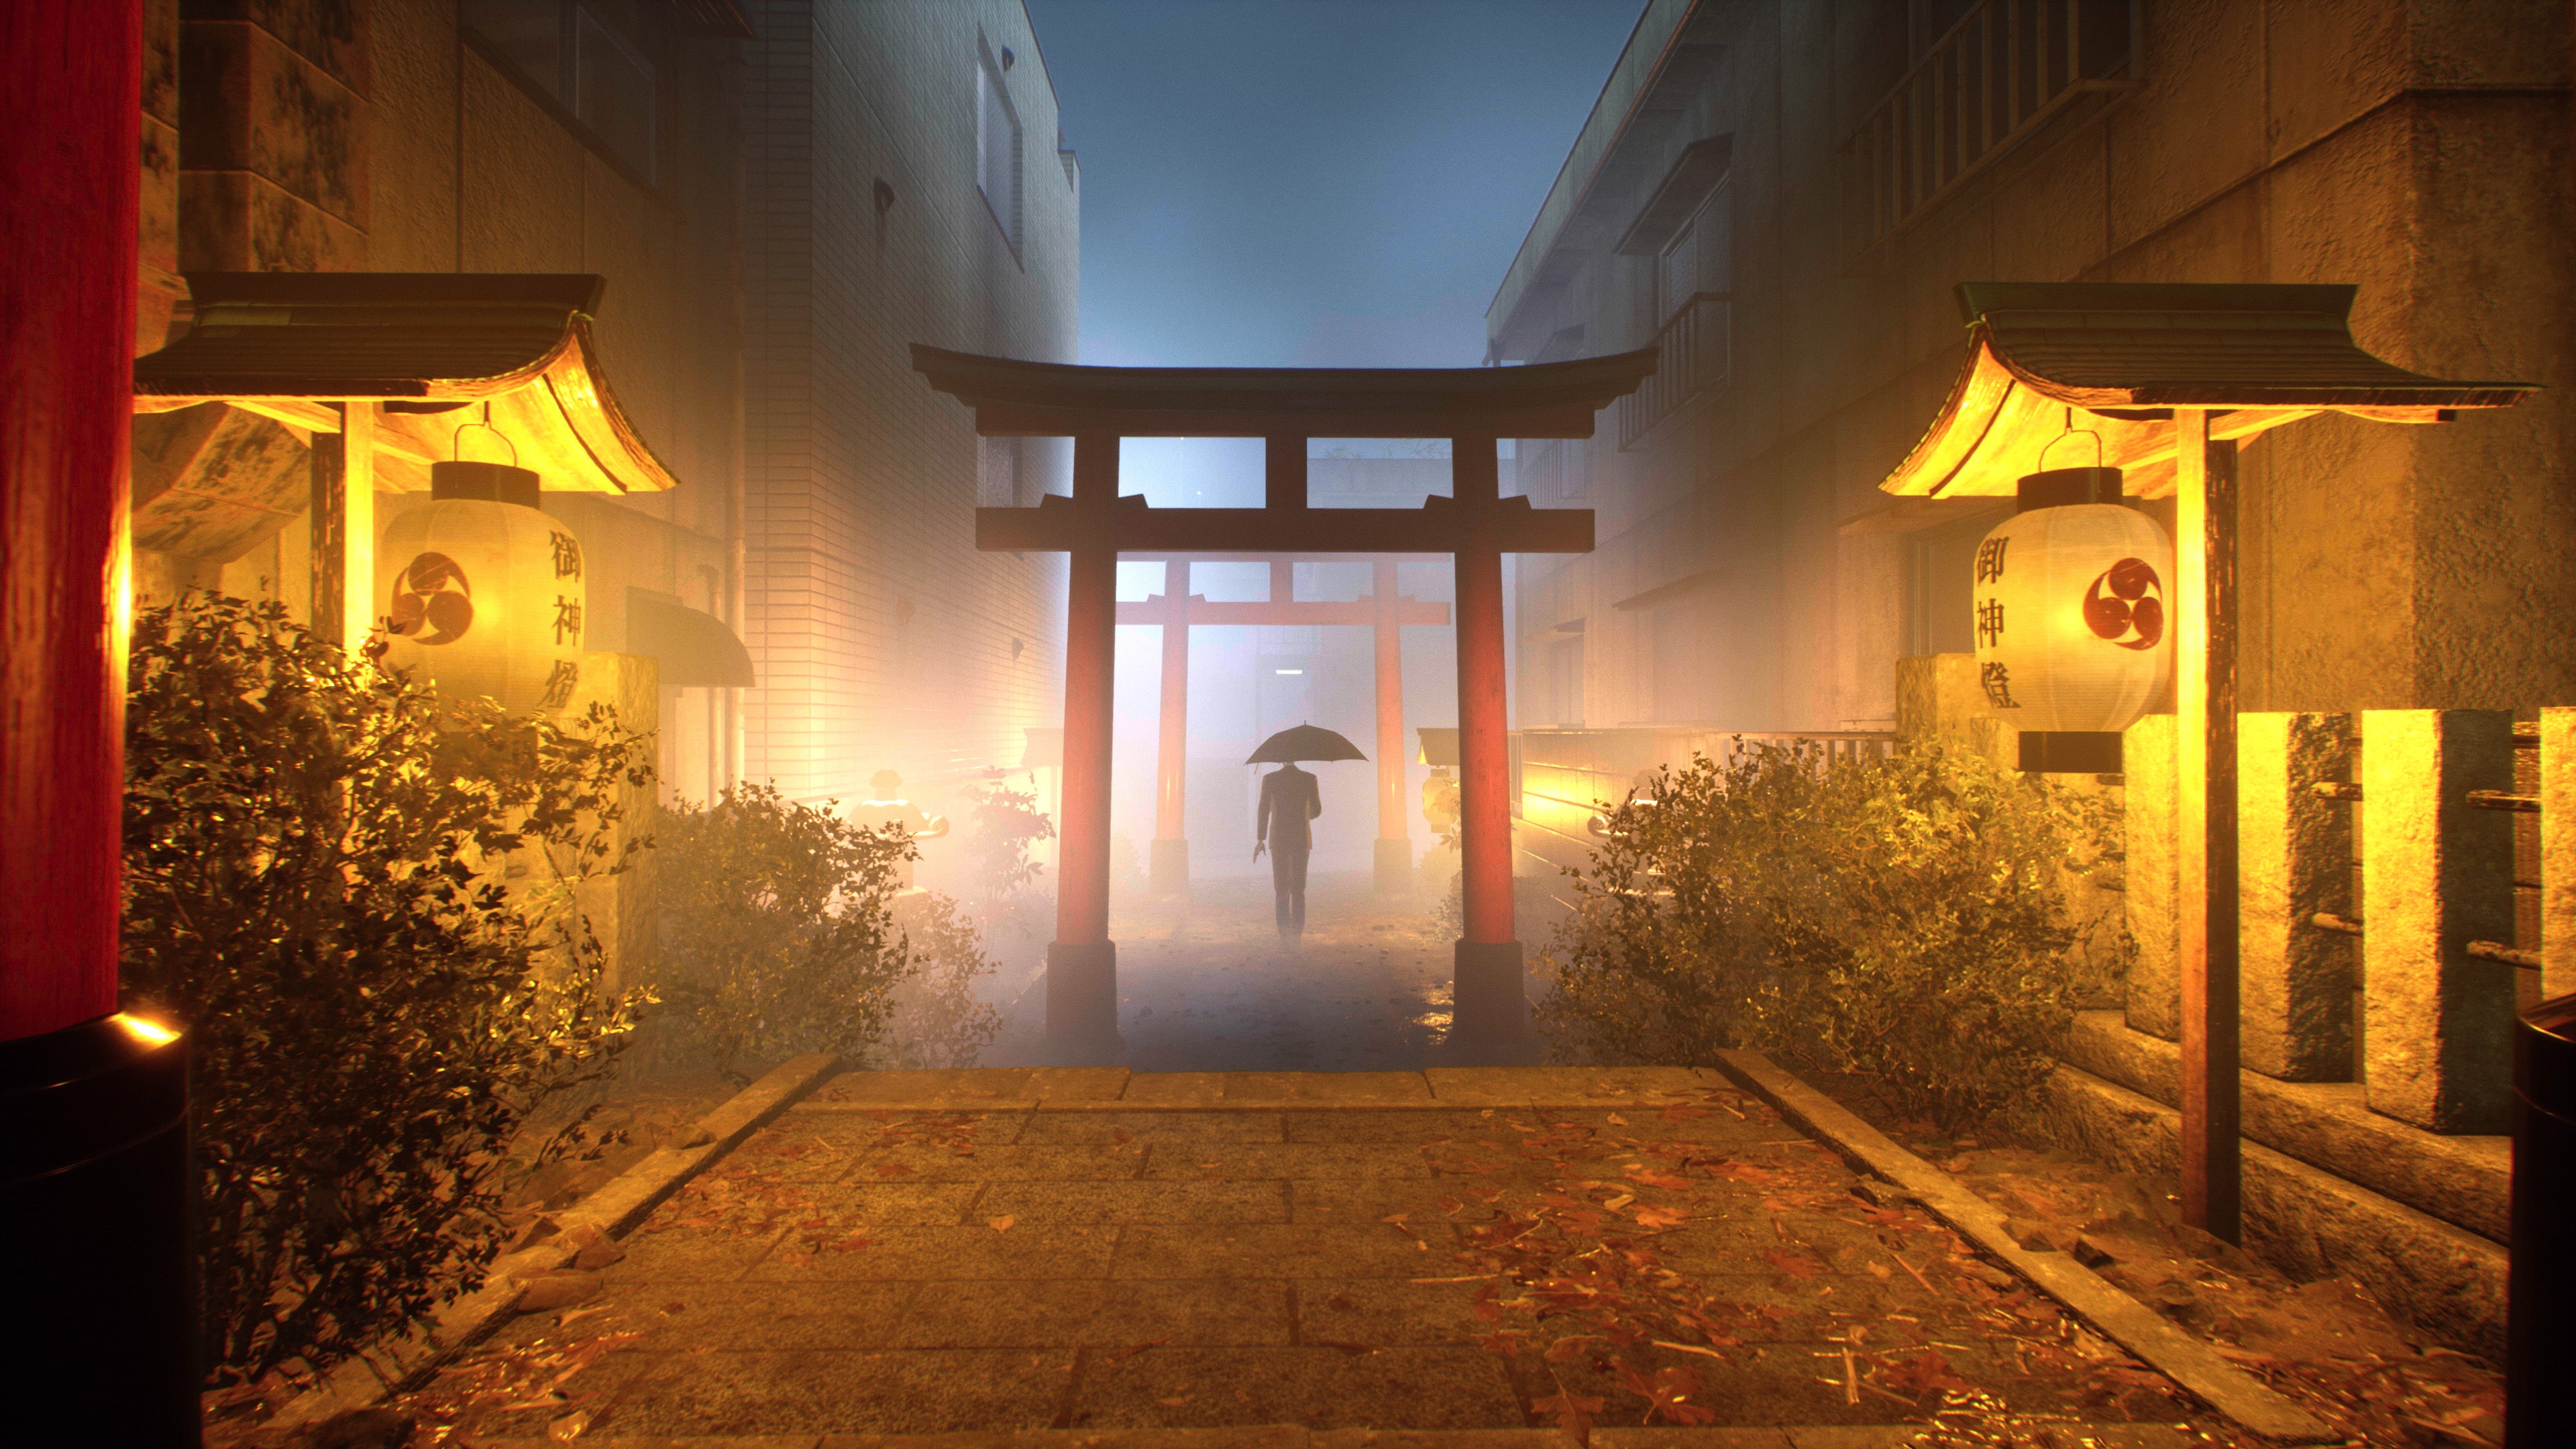 GhostWire: Tokyo - Download